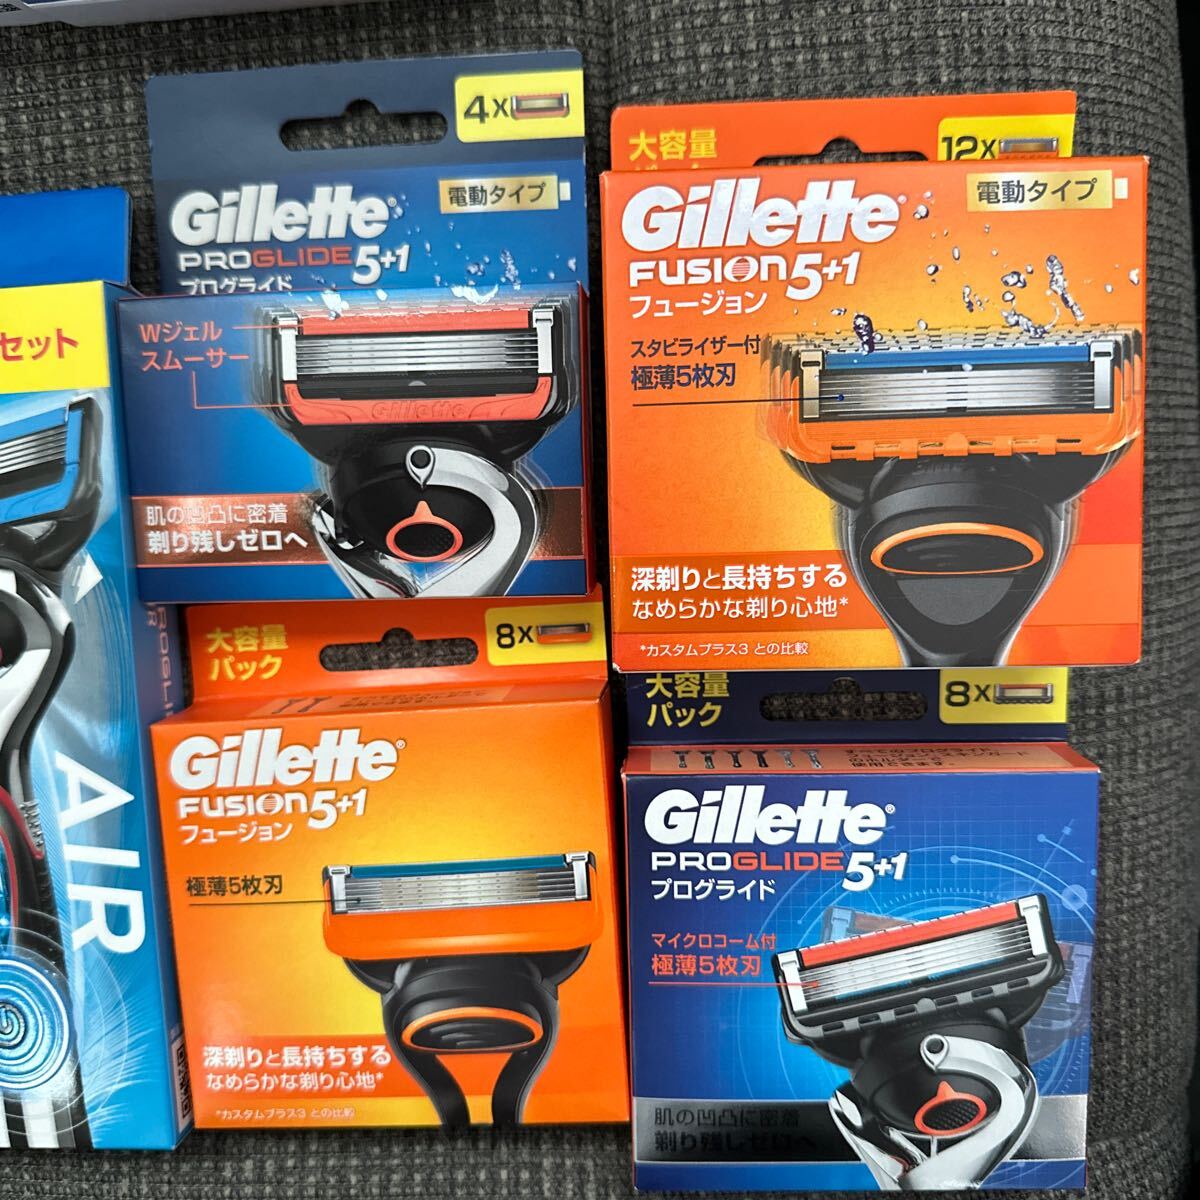 Gillette ジレット 新品 未使用 フュージョン5+1 電動タイプ プログライド 替刃 大容量 クール シェーバー お得セット 5枚刃 エアー の画像4